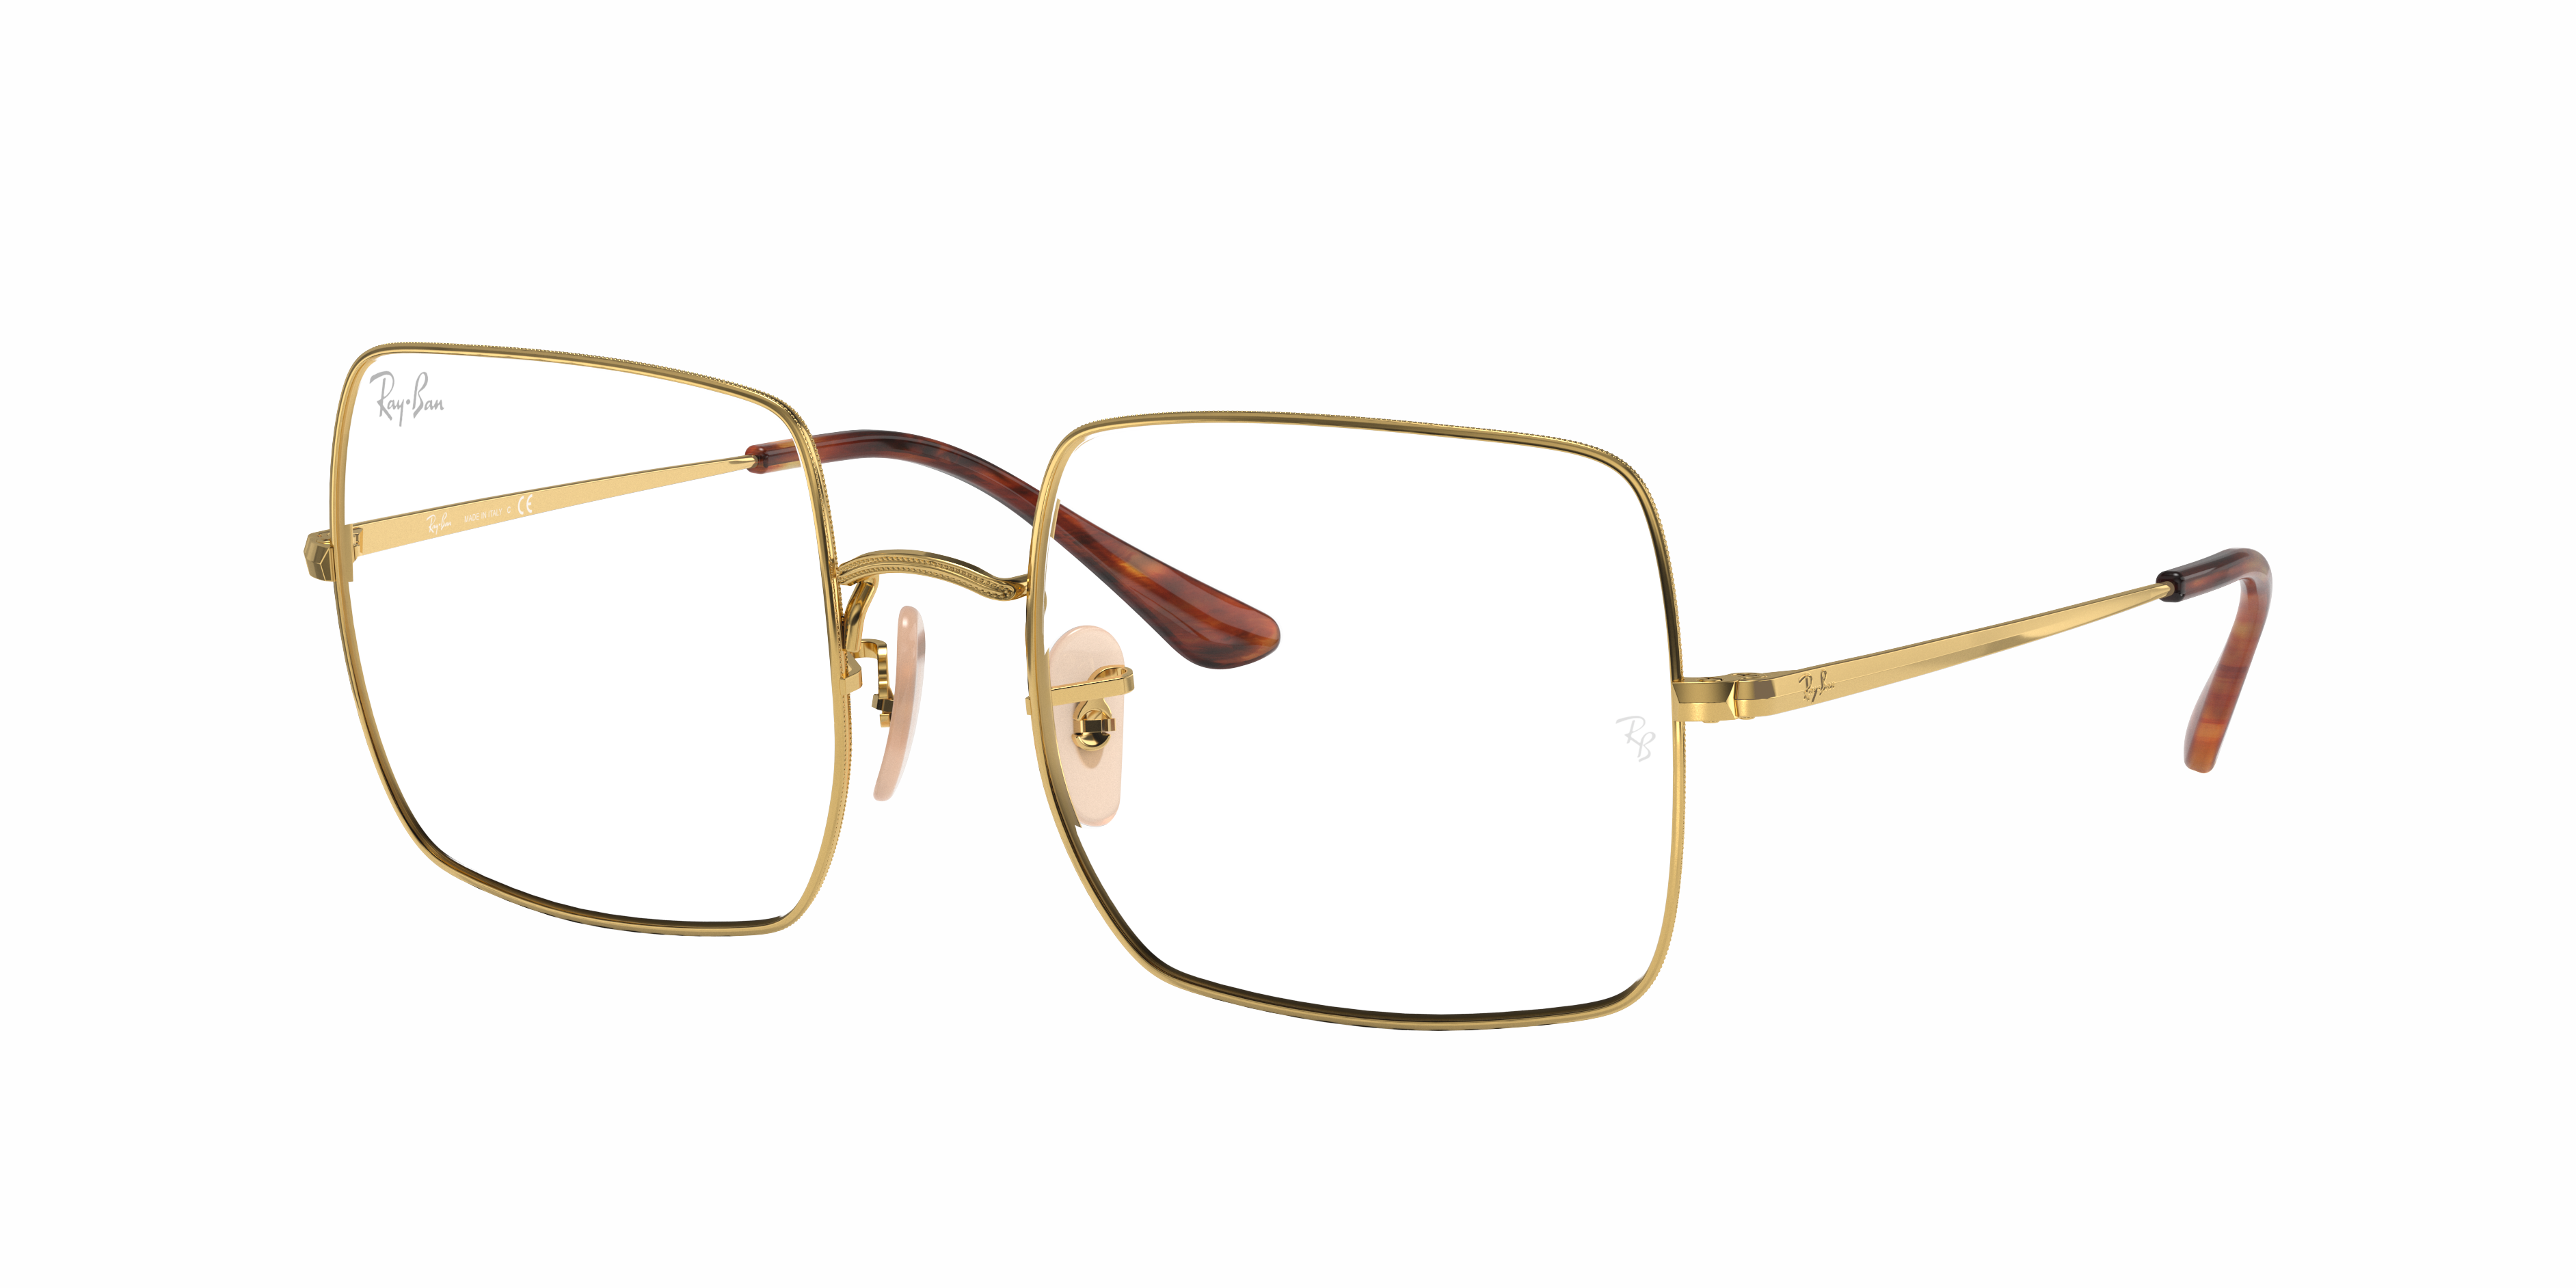 ray ban square 1971 sunglasses